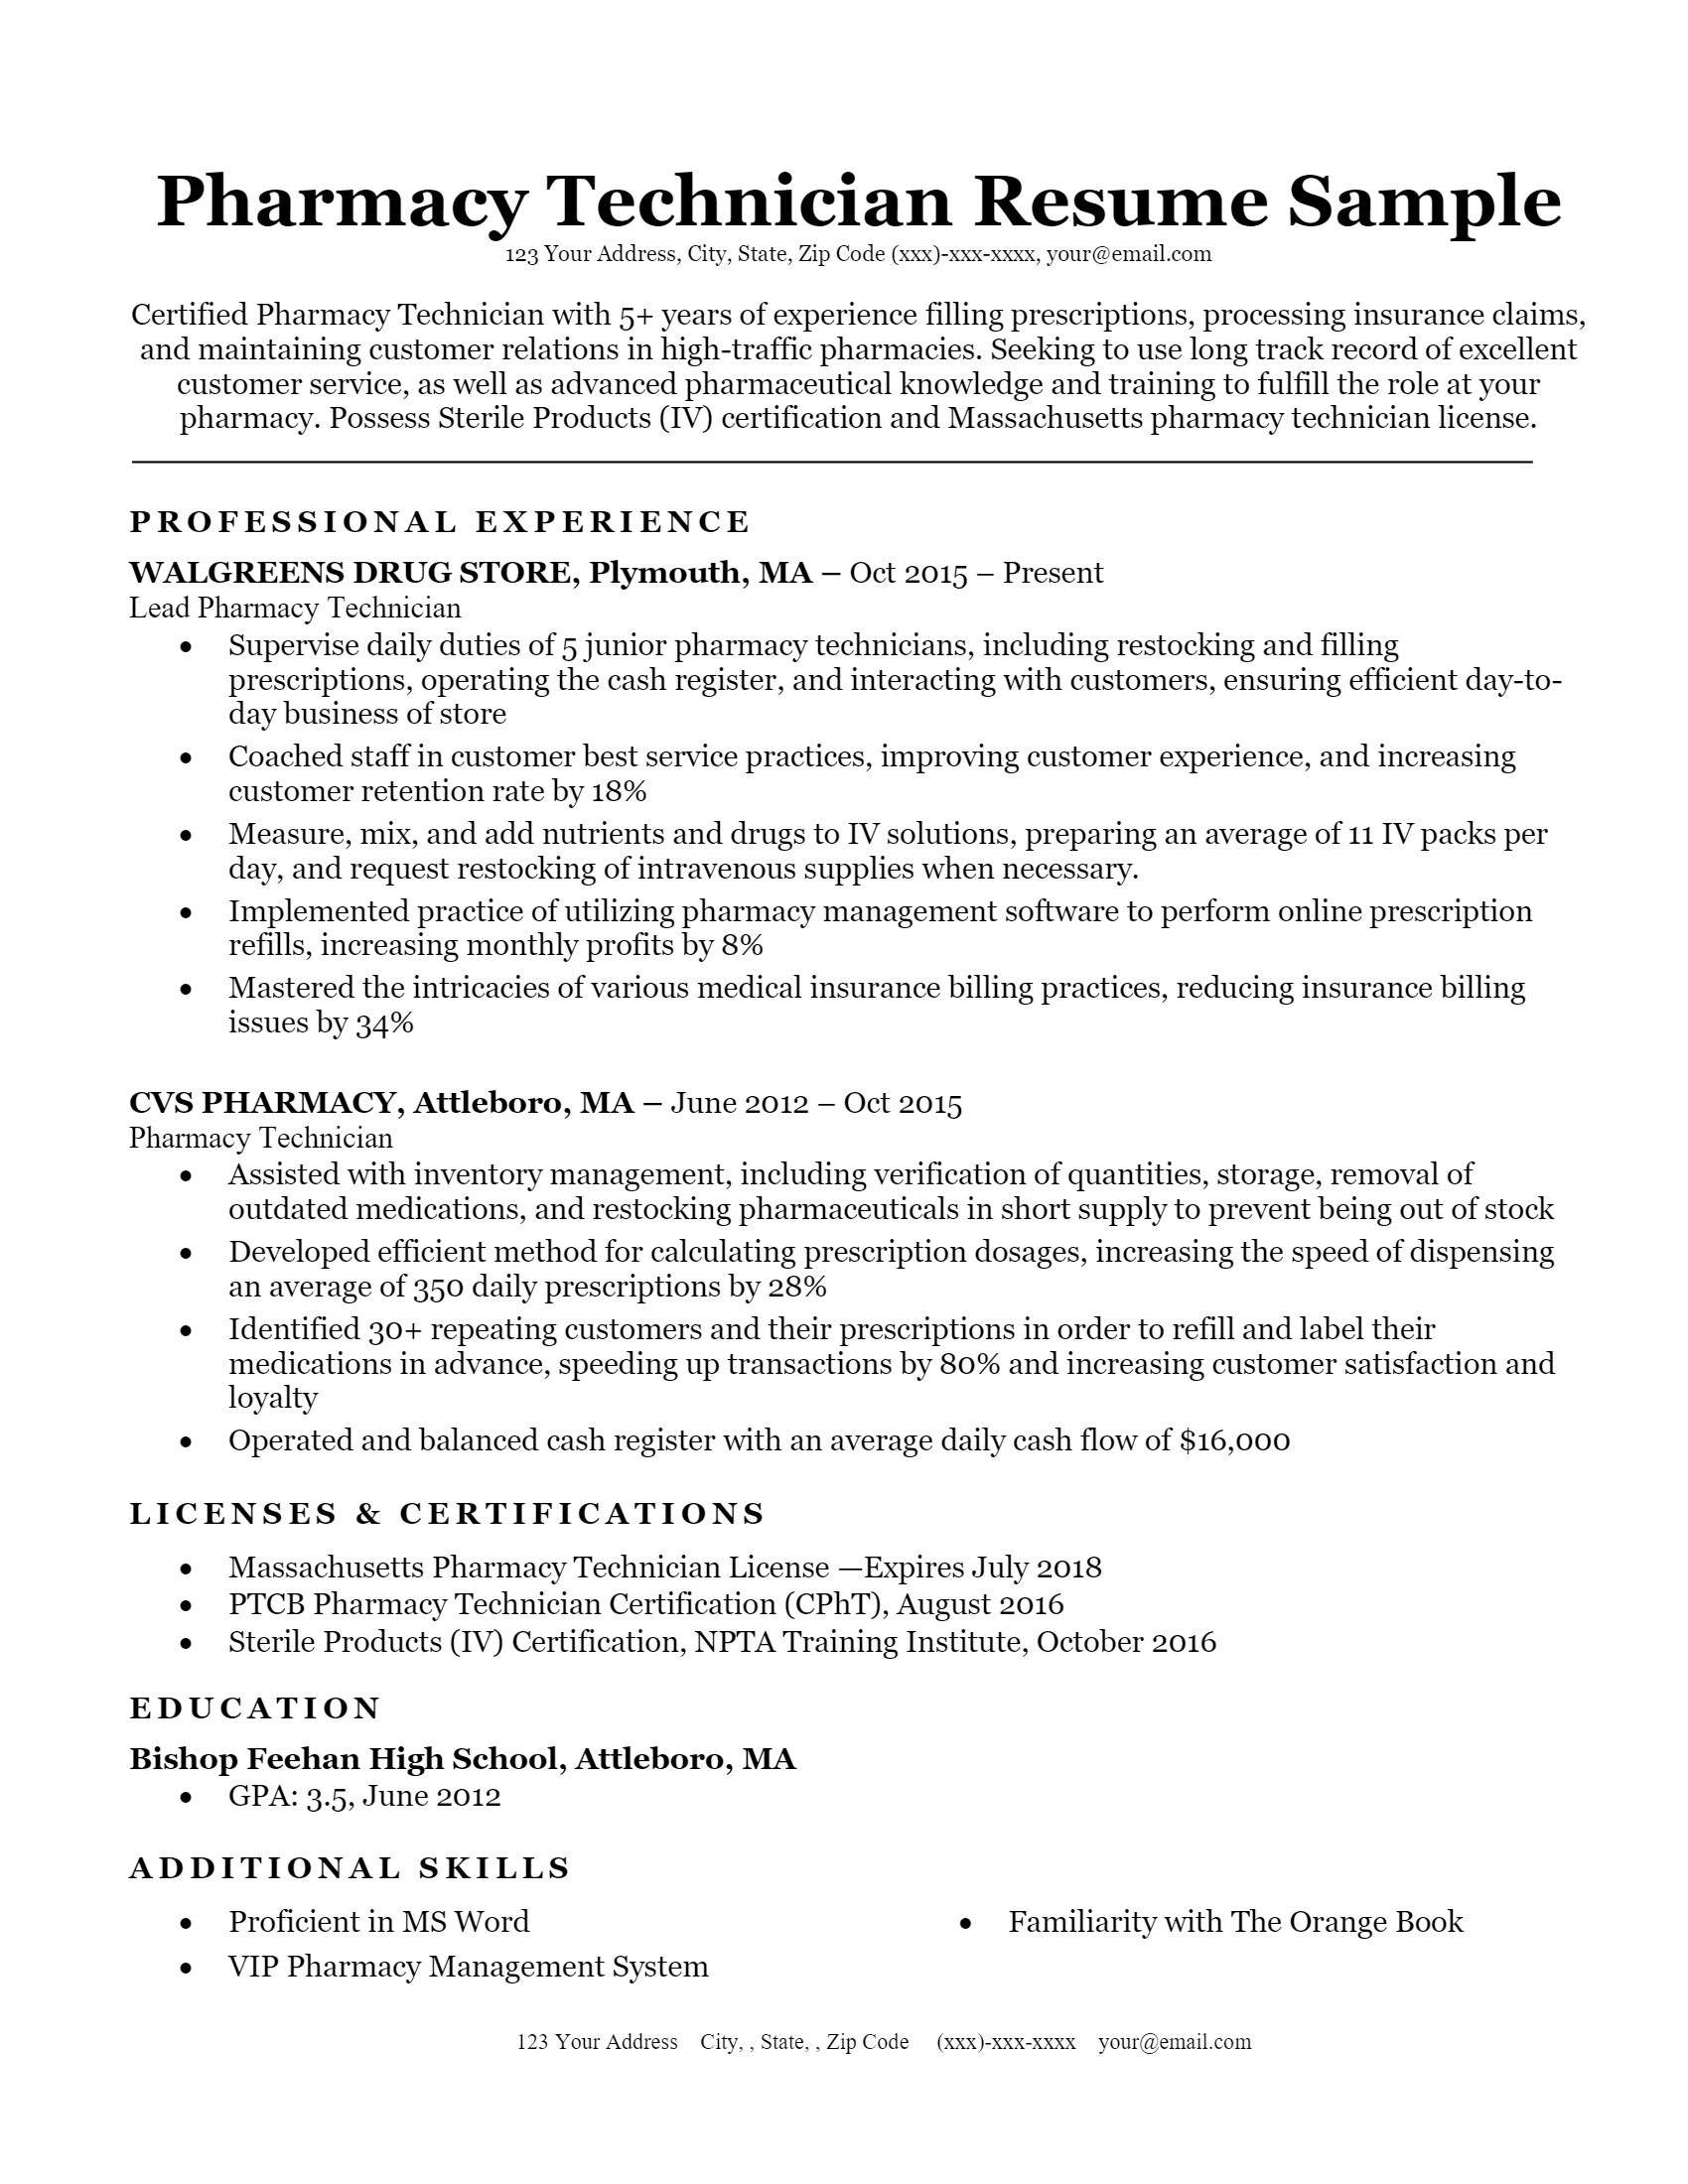 Pharmacy Technician Resume .Docx (Word)